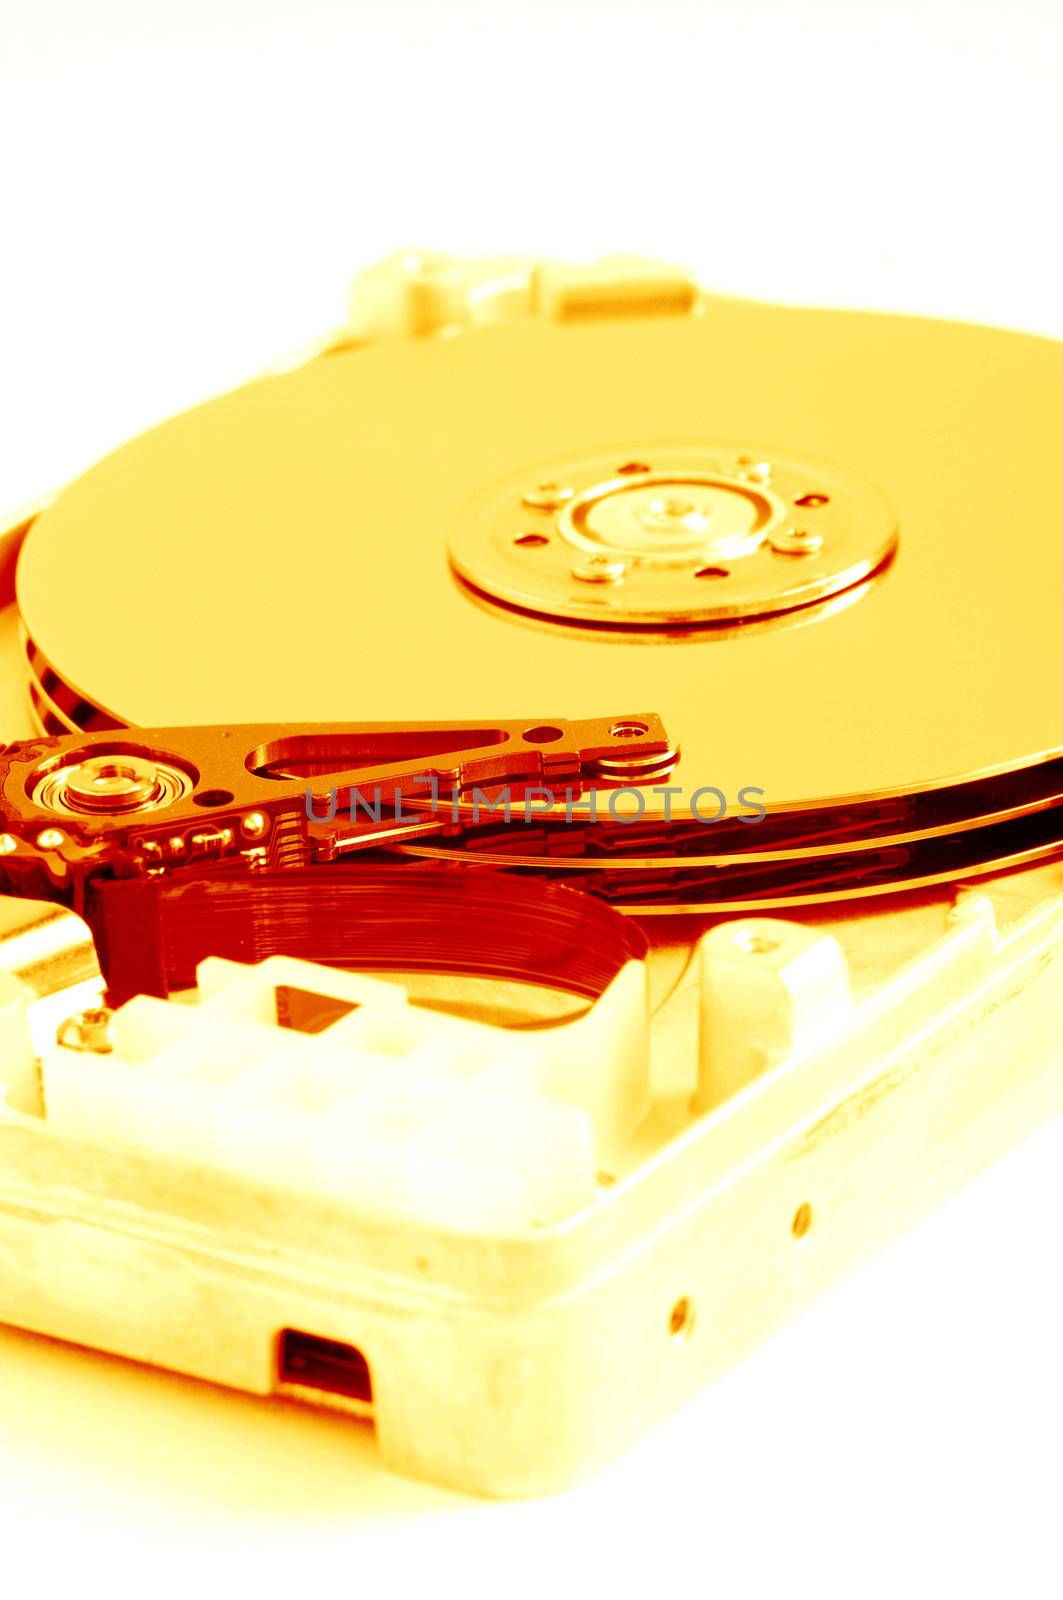 detail of hard disk drive. Golden drive.